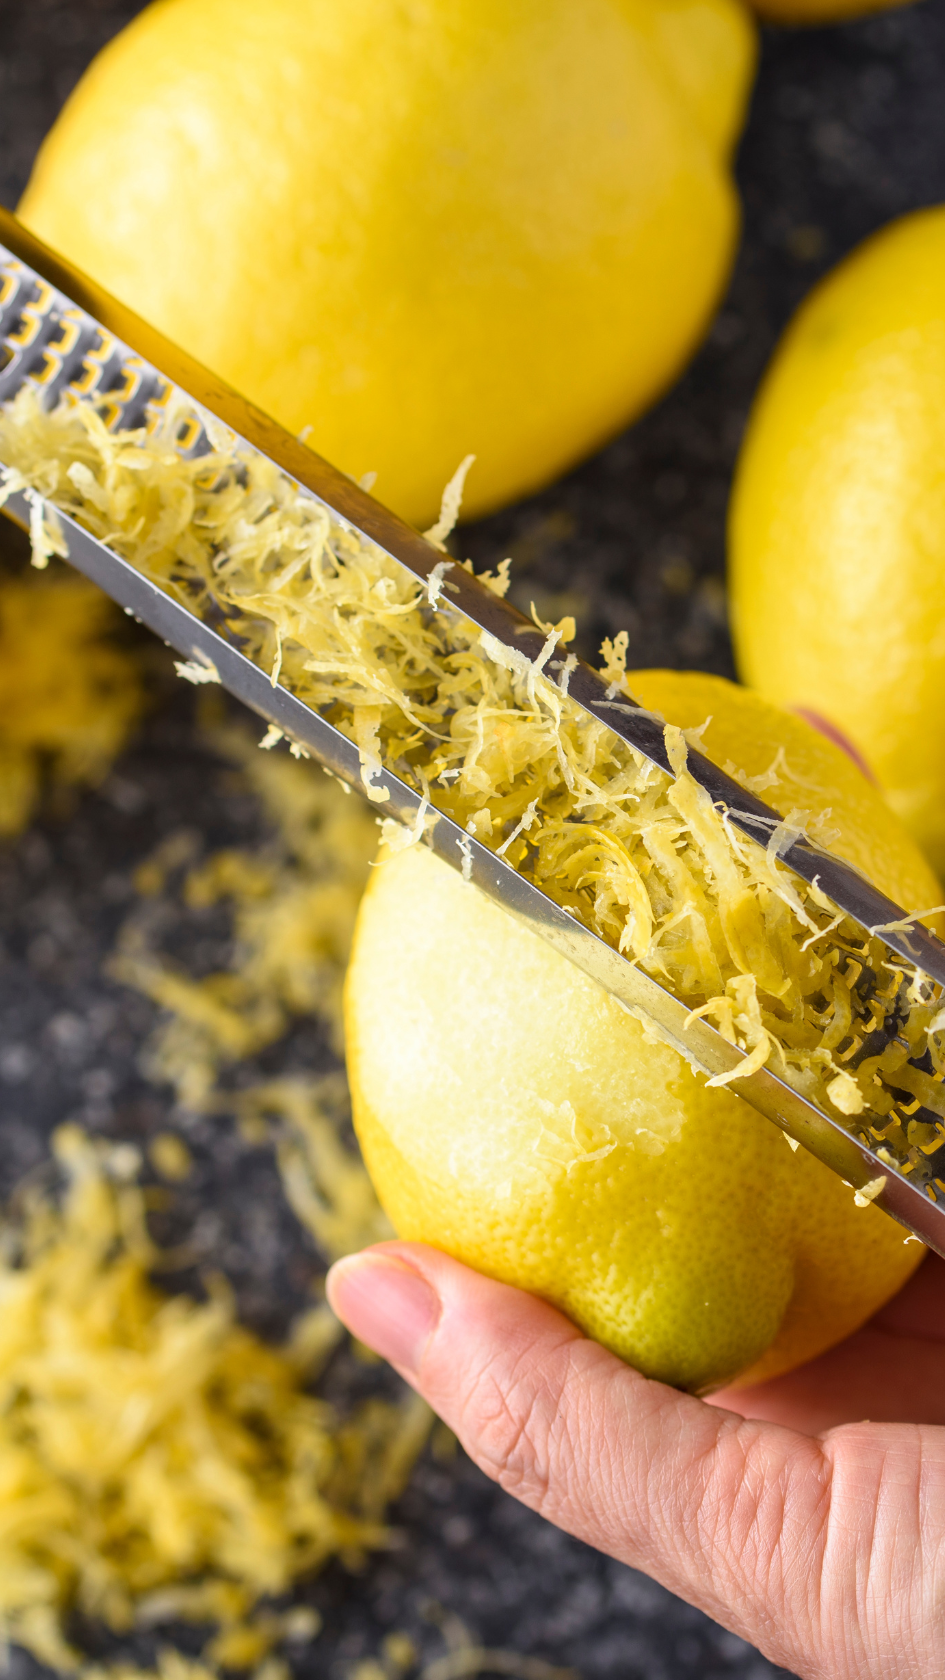 microplane zesting one lemon